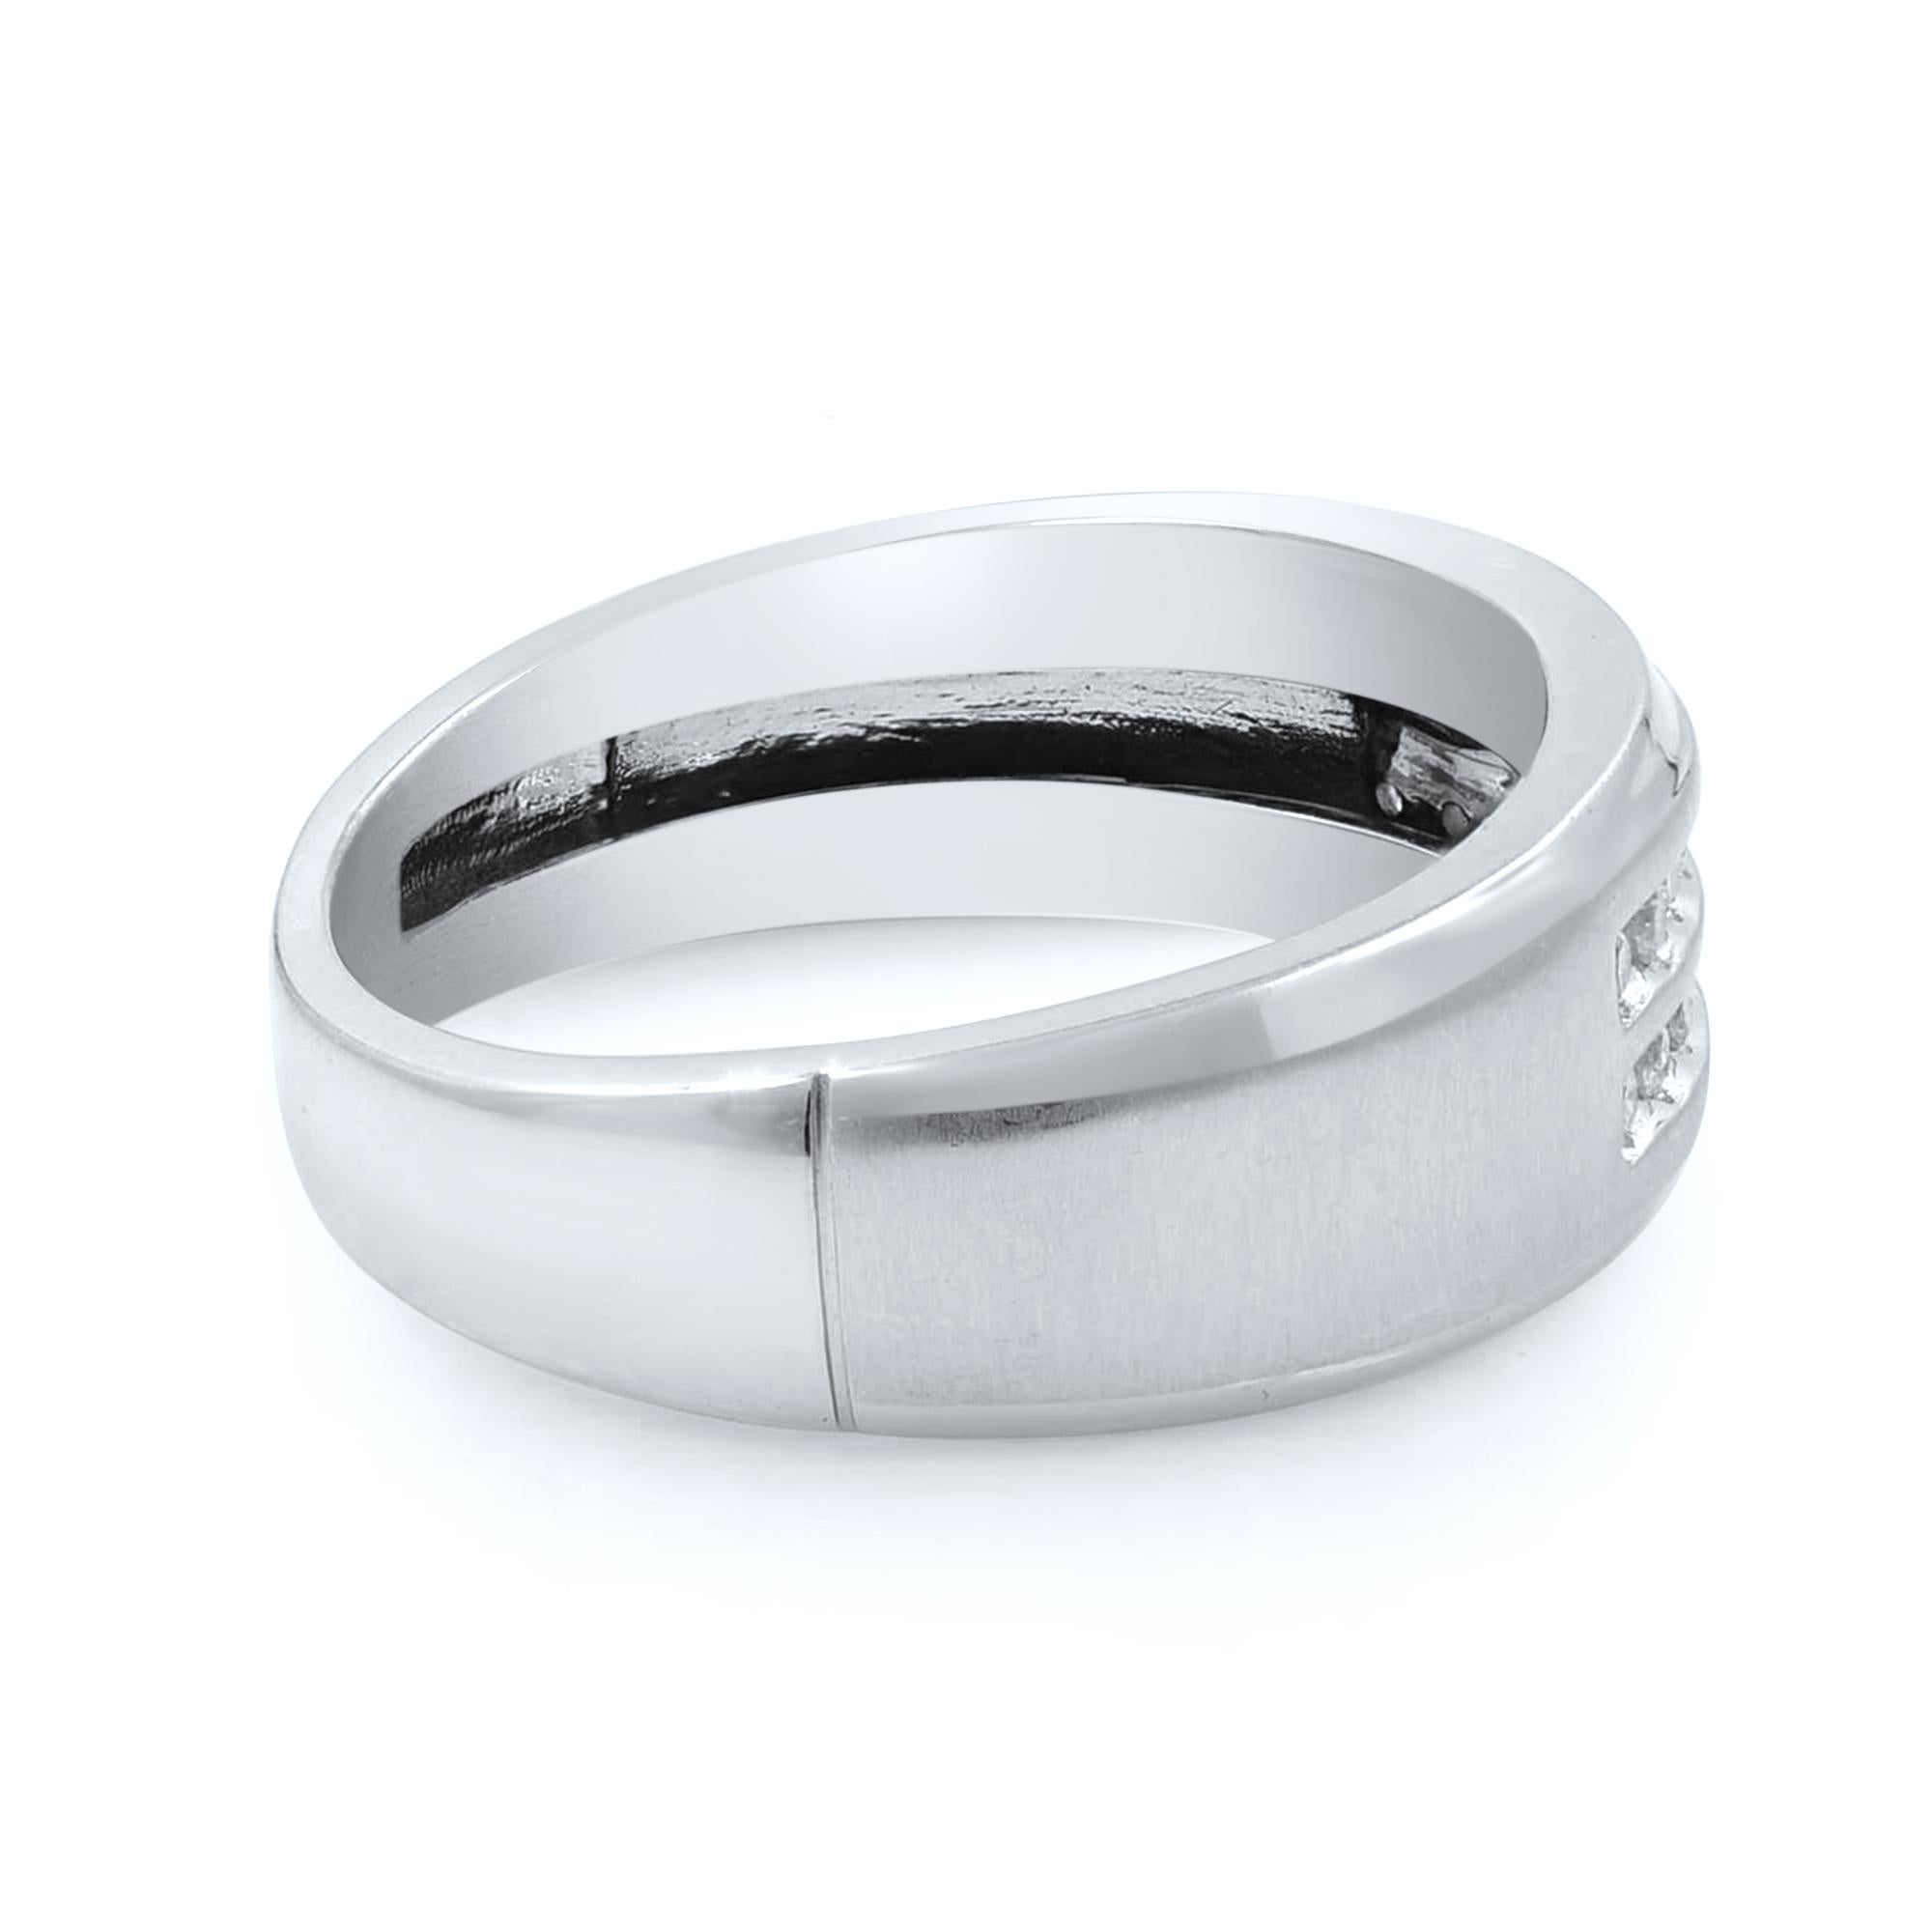 Women's Round Cut Diamond Men's Wedding Band Ring 10k White Gold 0.36 Cttw For Sale